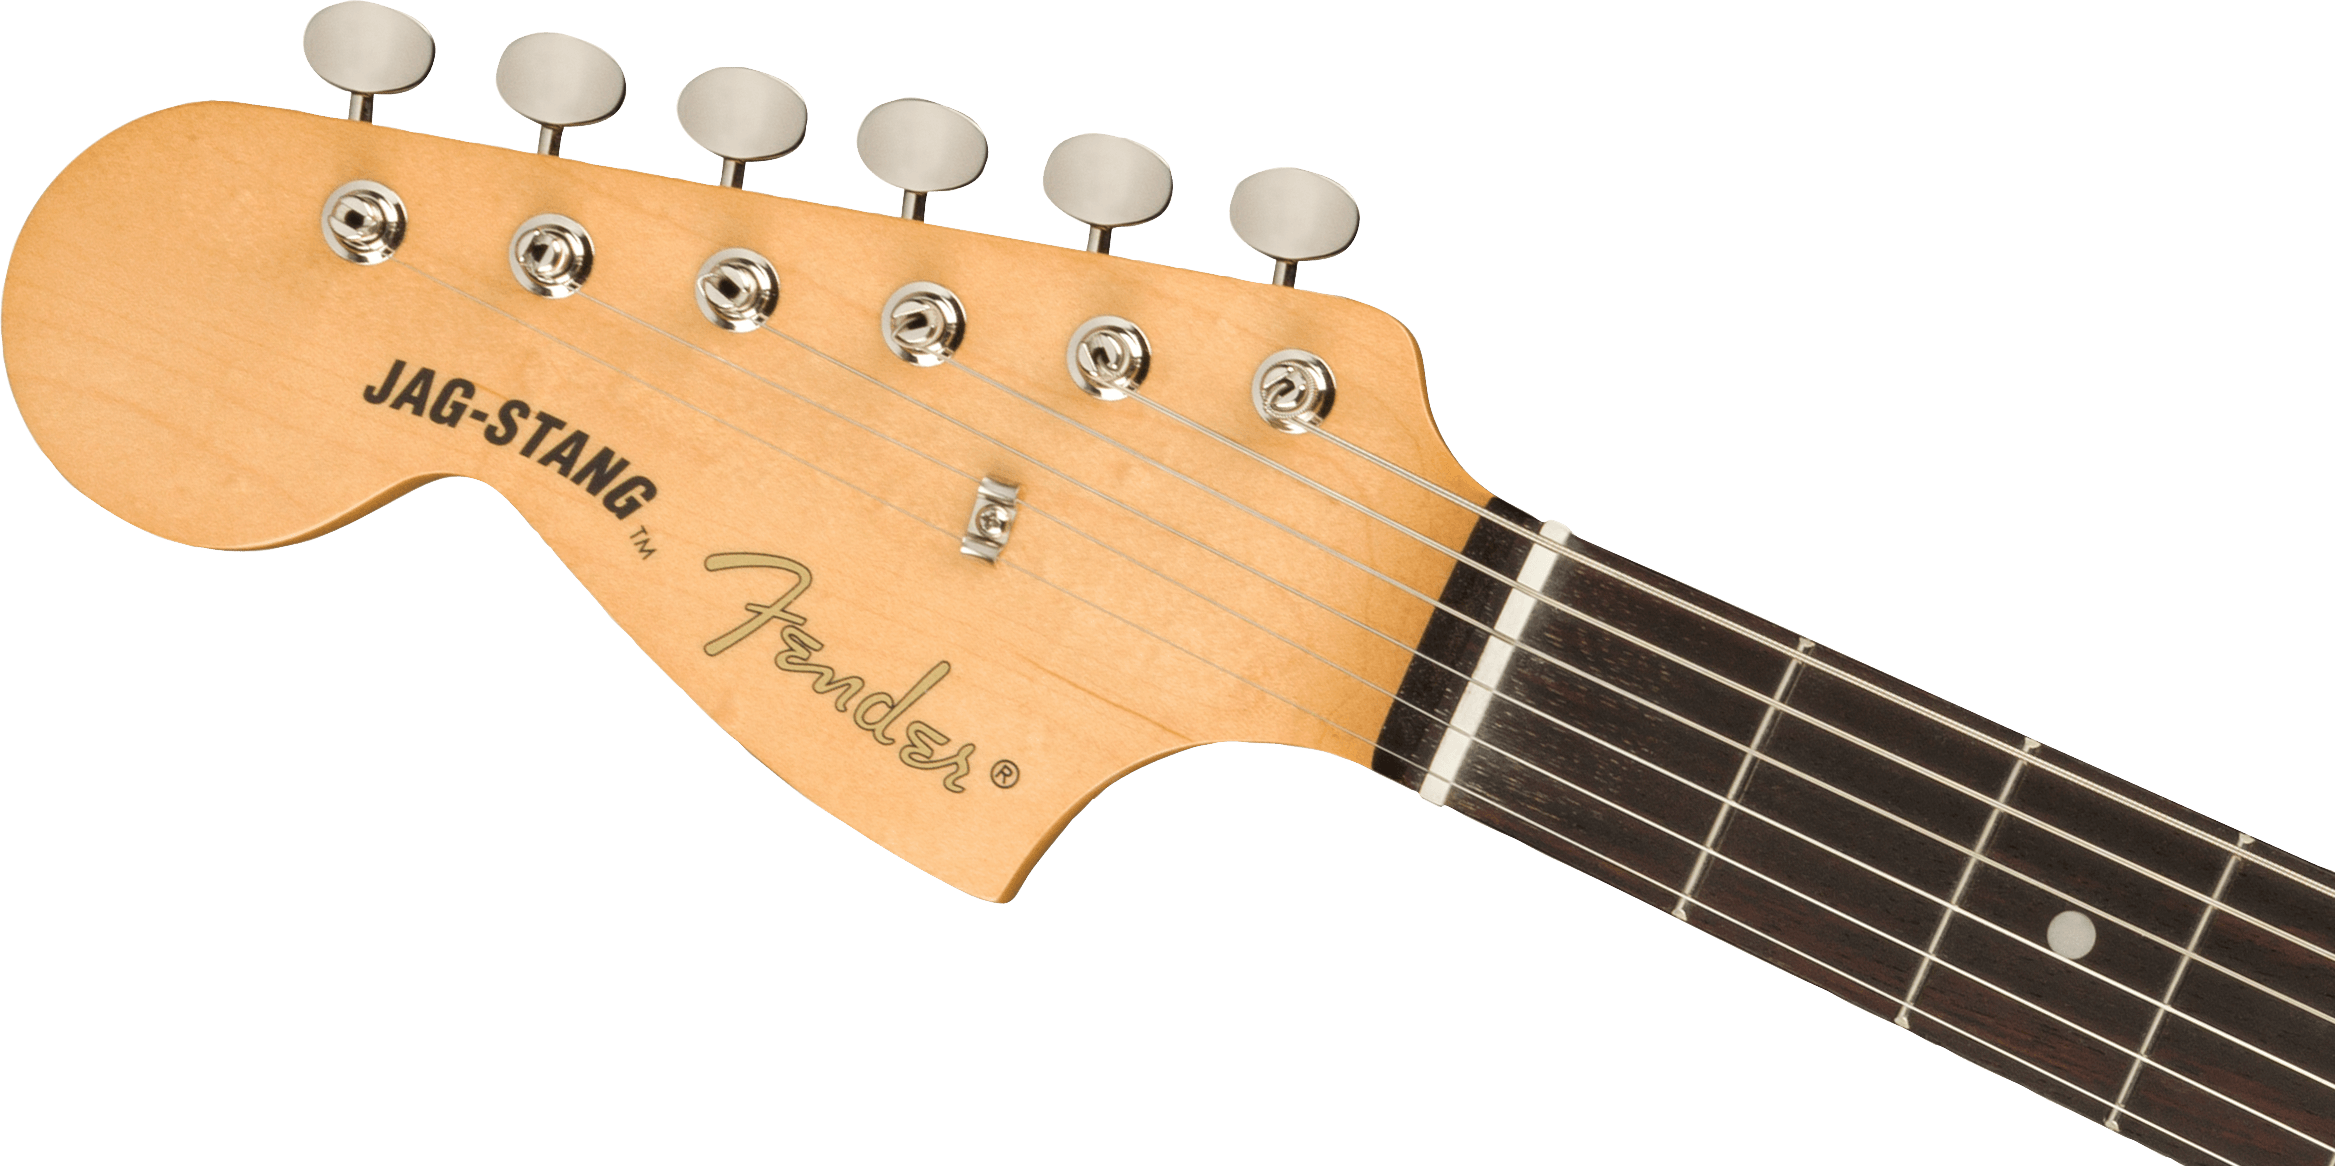 Fender Jag-stang Kurt Cobain Artist Gaucher Hs Trem Rw - Sonic Blue - Left-handed electric guitar - Variation 4